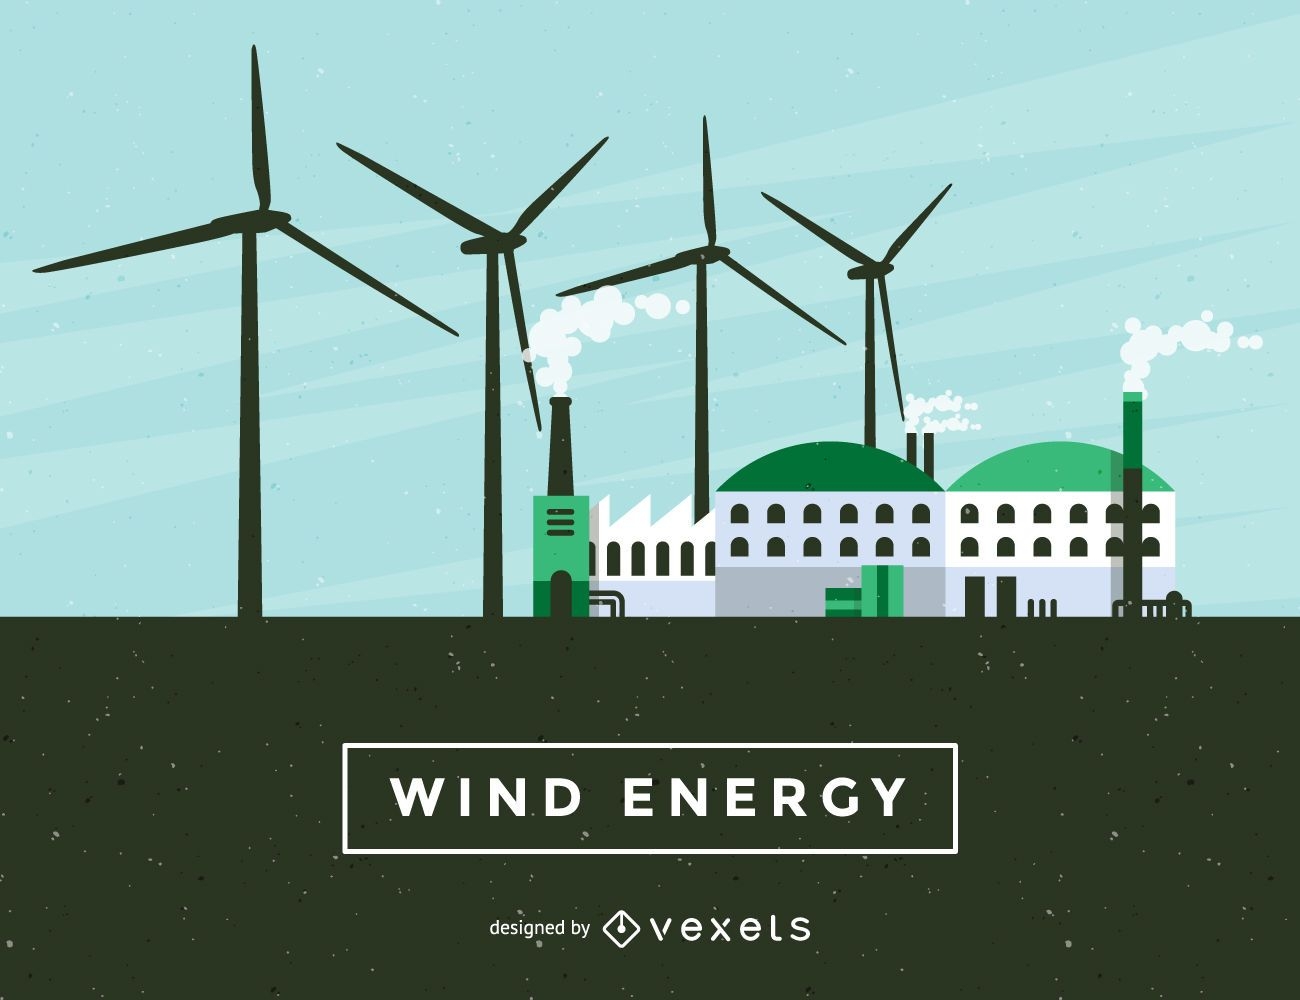 Windenergie Illustration